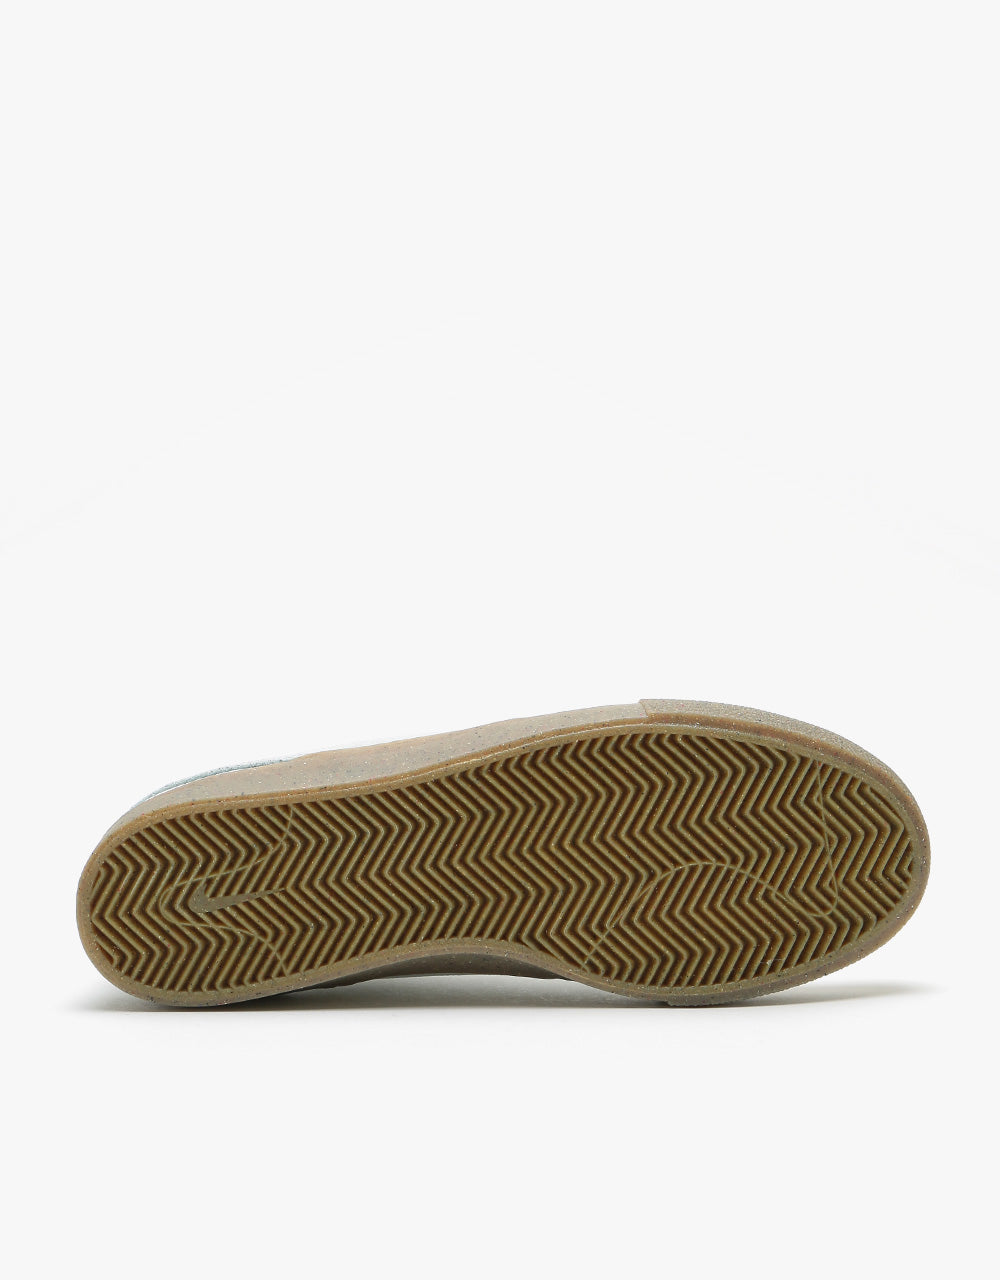 Nike SB Zoom Stefan Janoski FL RM Skate Shoes - Pure Platinum/Pure Pla